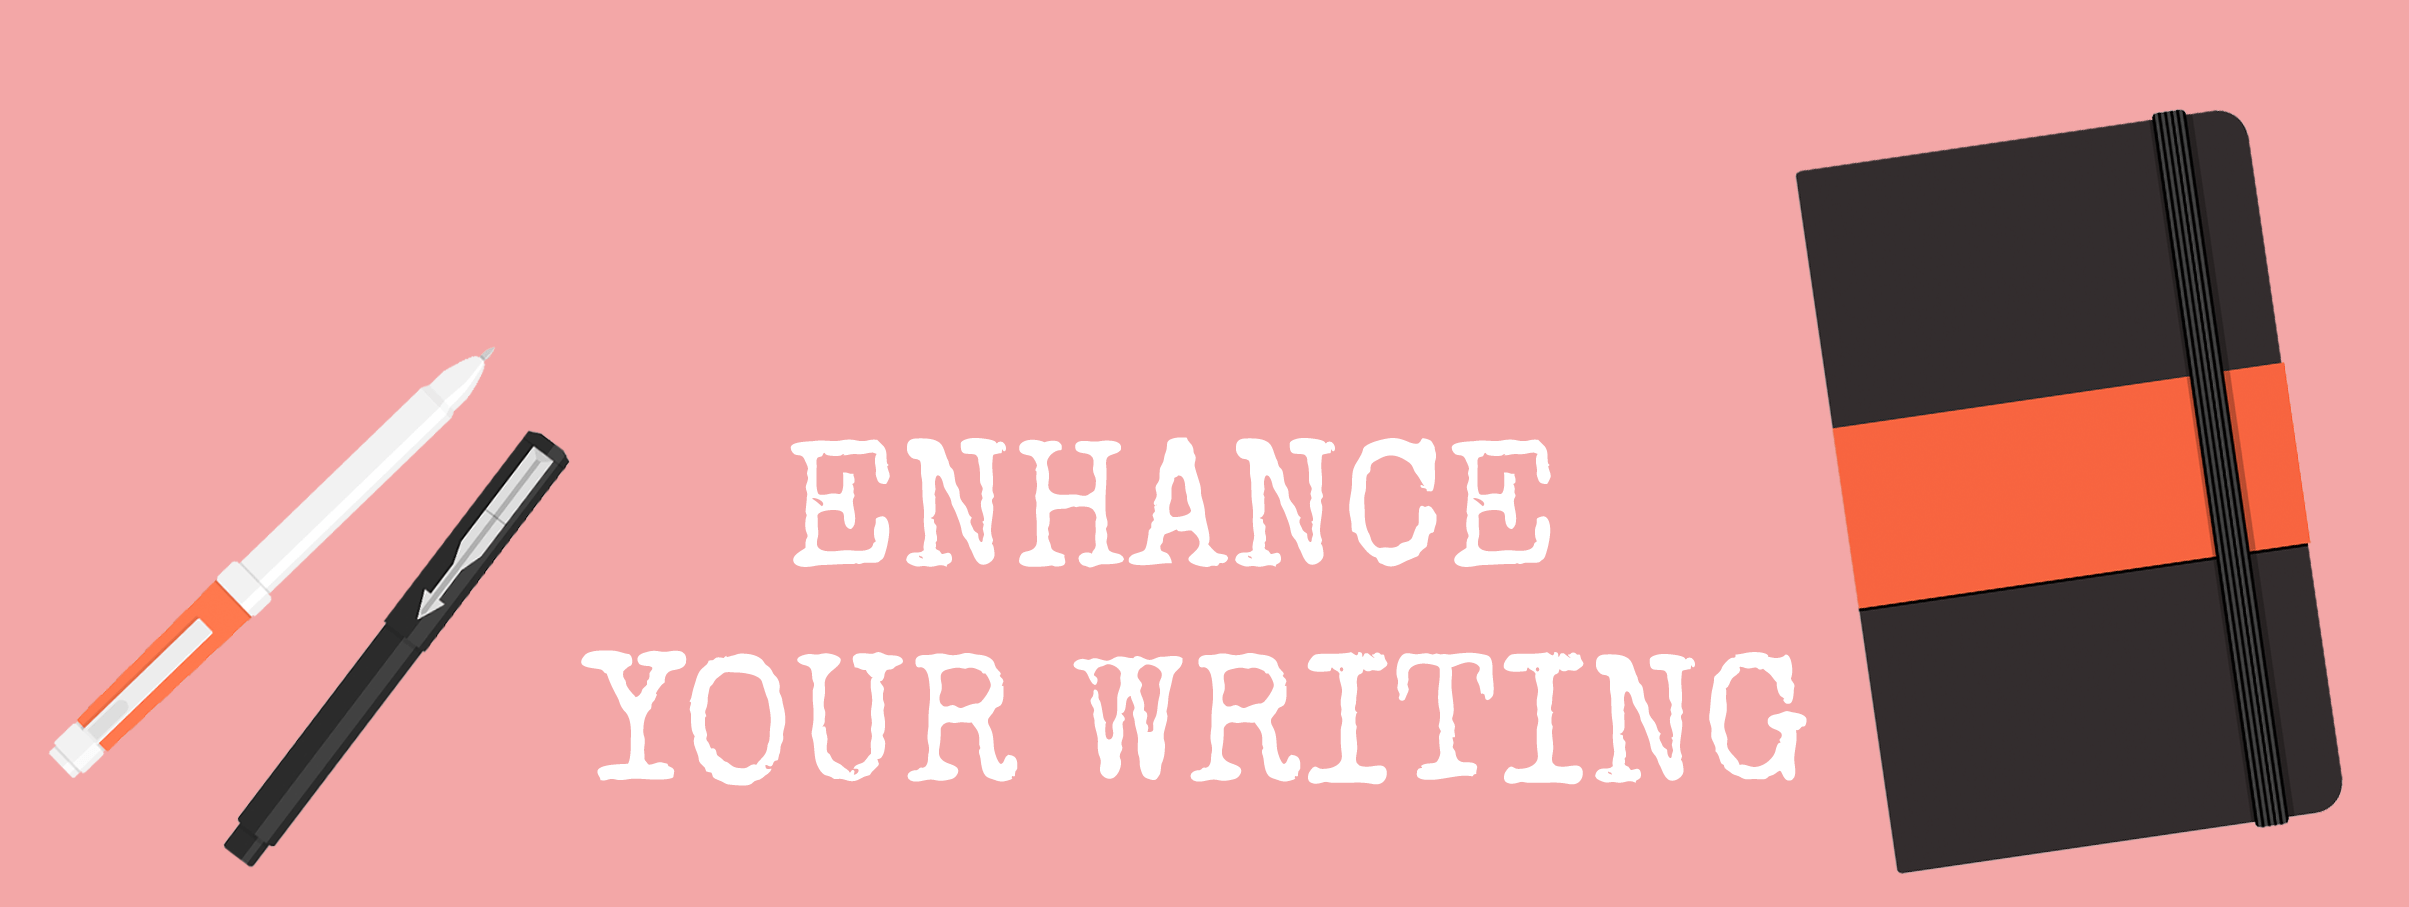 Enhance Your Writing